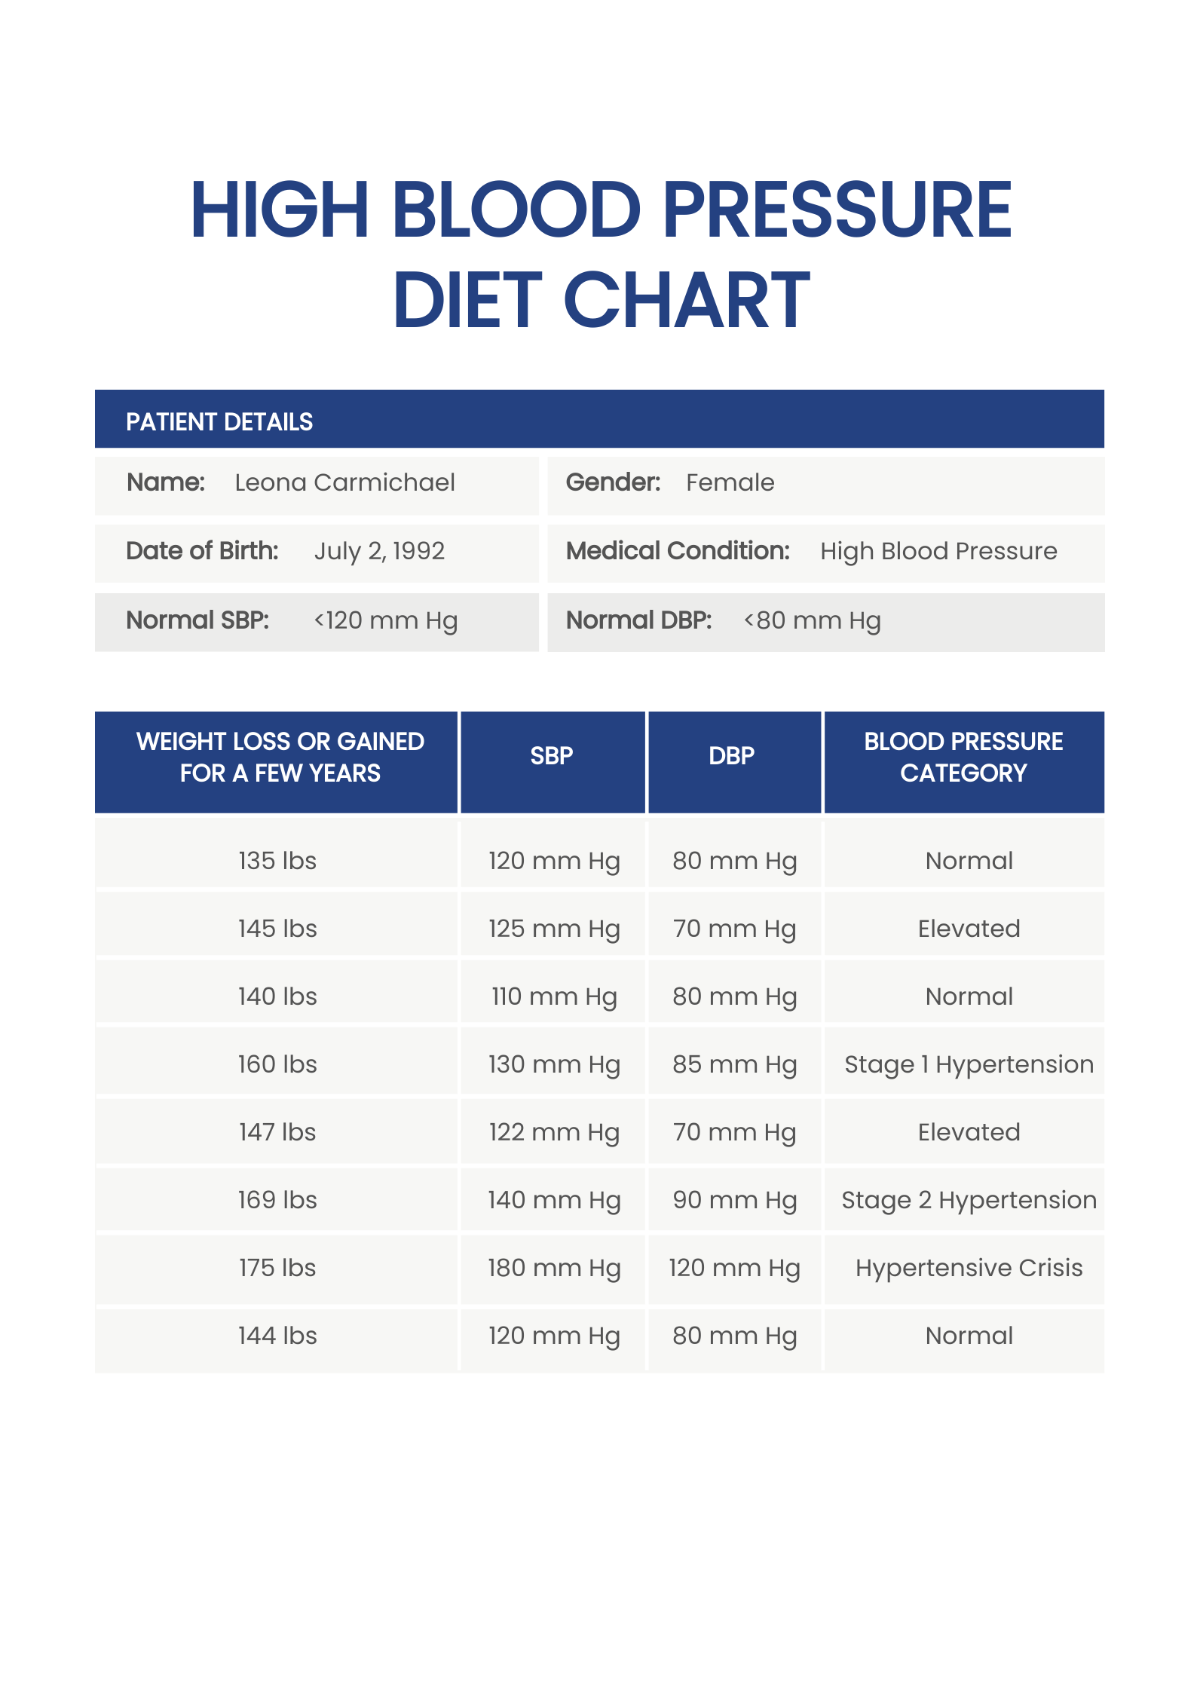 High Blood Pressure Diet Chart Template